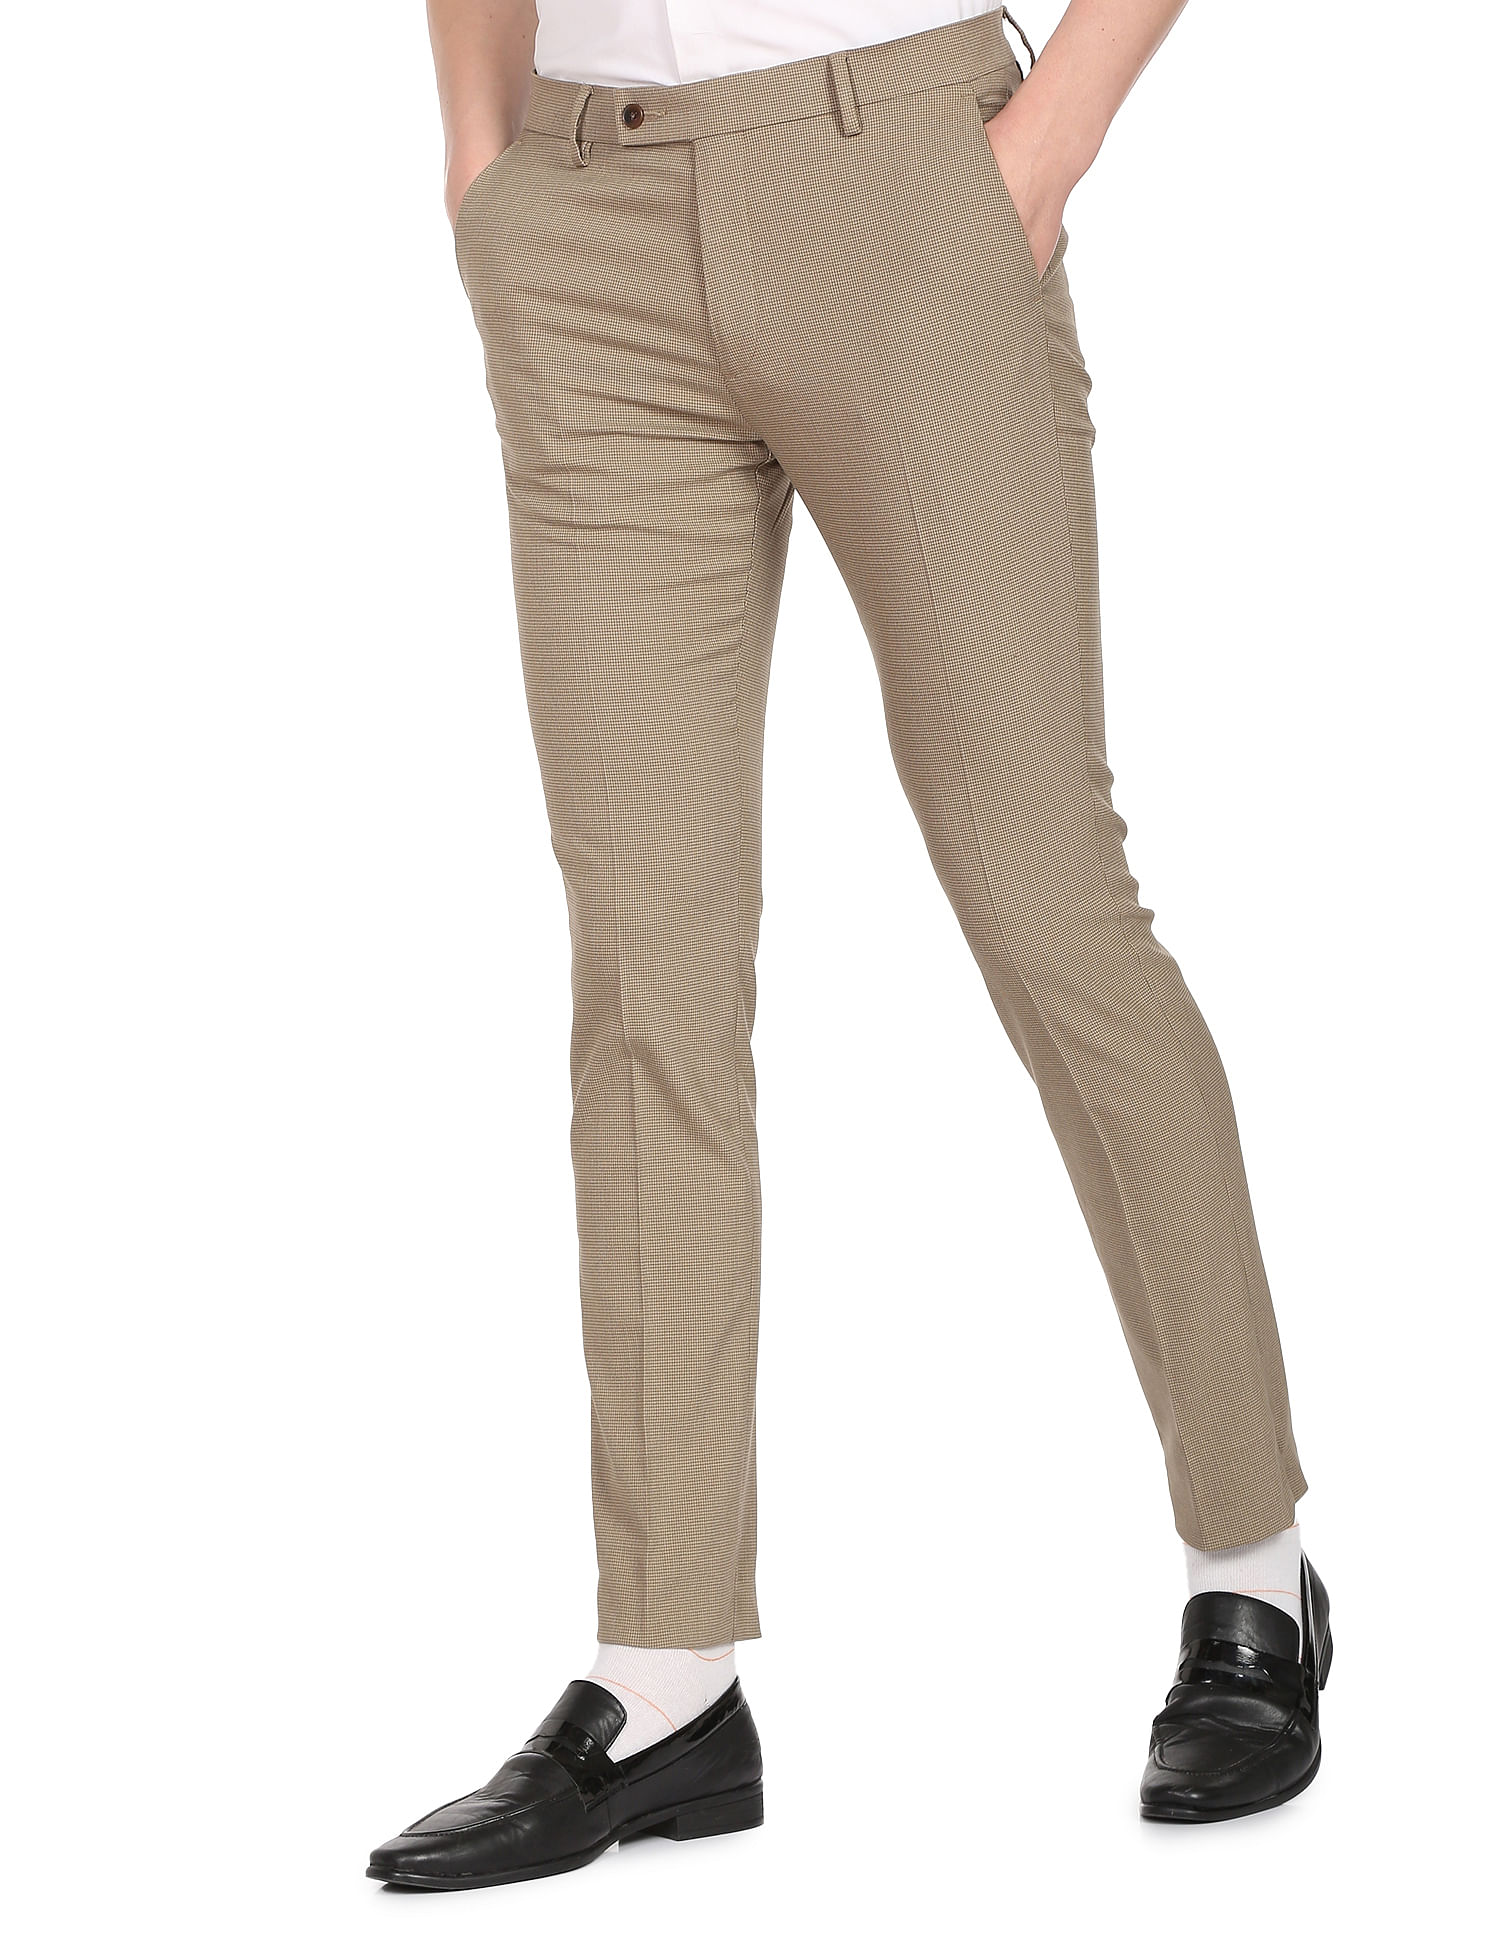 Buy Men Grey Solid Slim Fit Formal Trousers Online - 580916 | Peter England